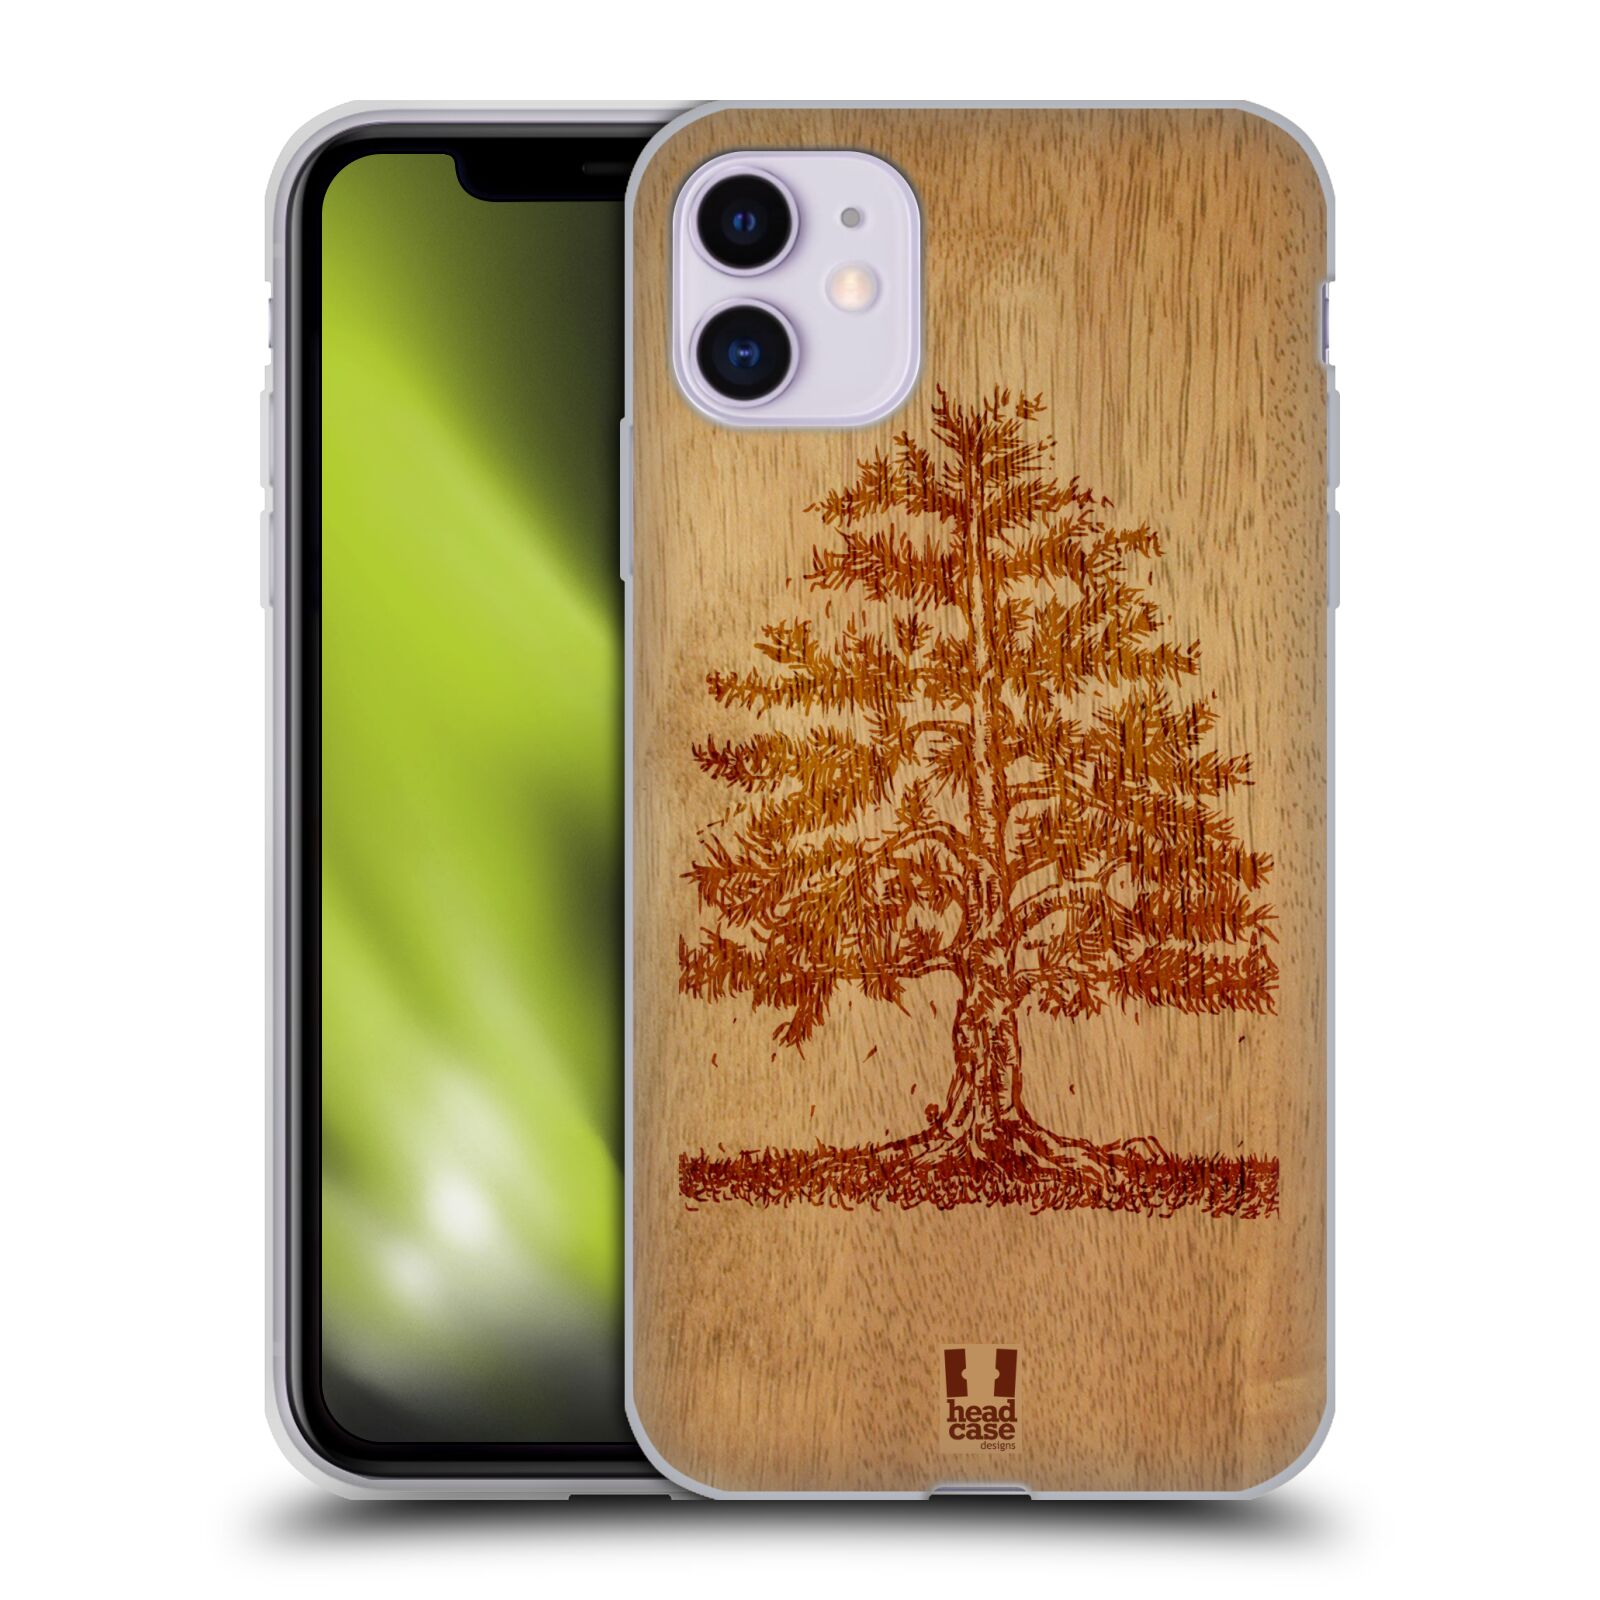 Silikonové pouzdro na mobil Apple iPhone 11 - Head Case - WOODART TREE (Silikonový kryt, obal, pouzdro na mobilní telefon Apple iPhone 11 s displejem 6,1" s motivem WOODART TREE)